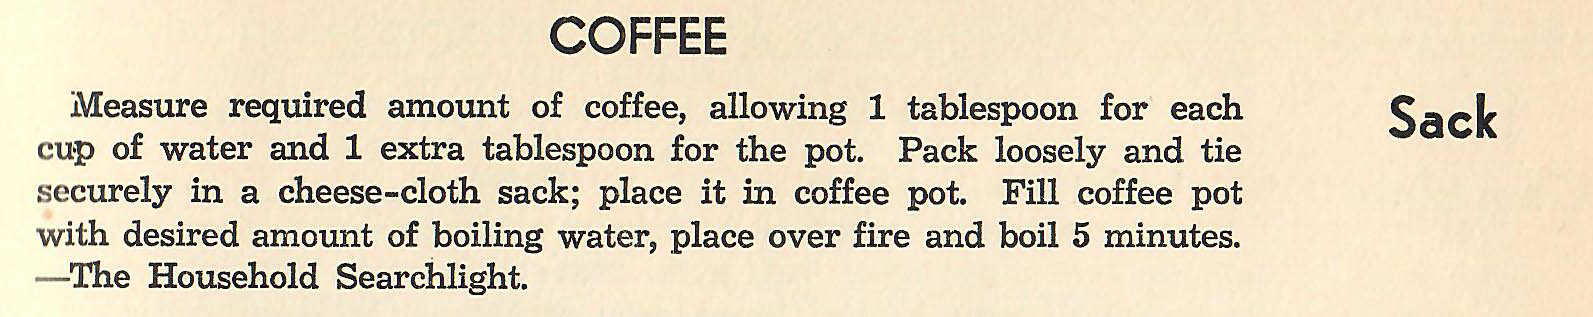 Recipe to make Sack Coffee